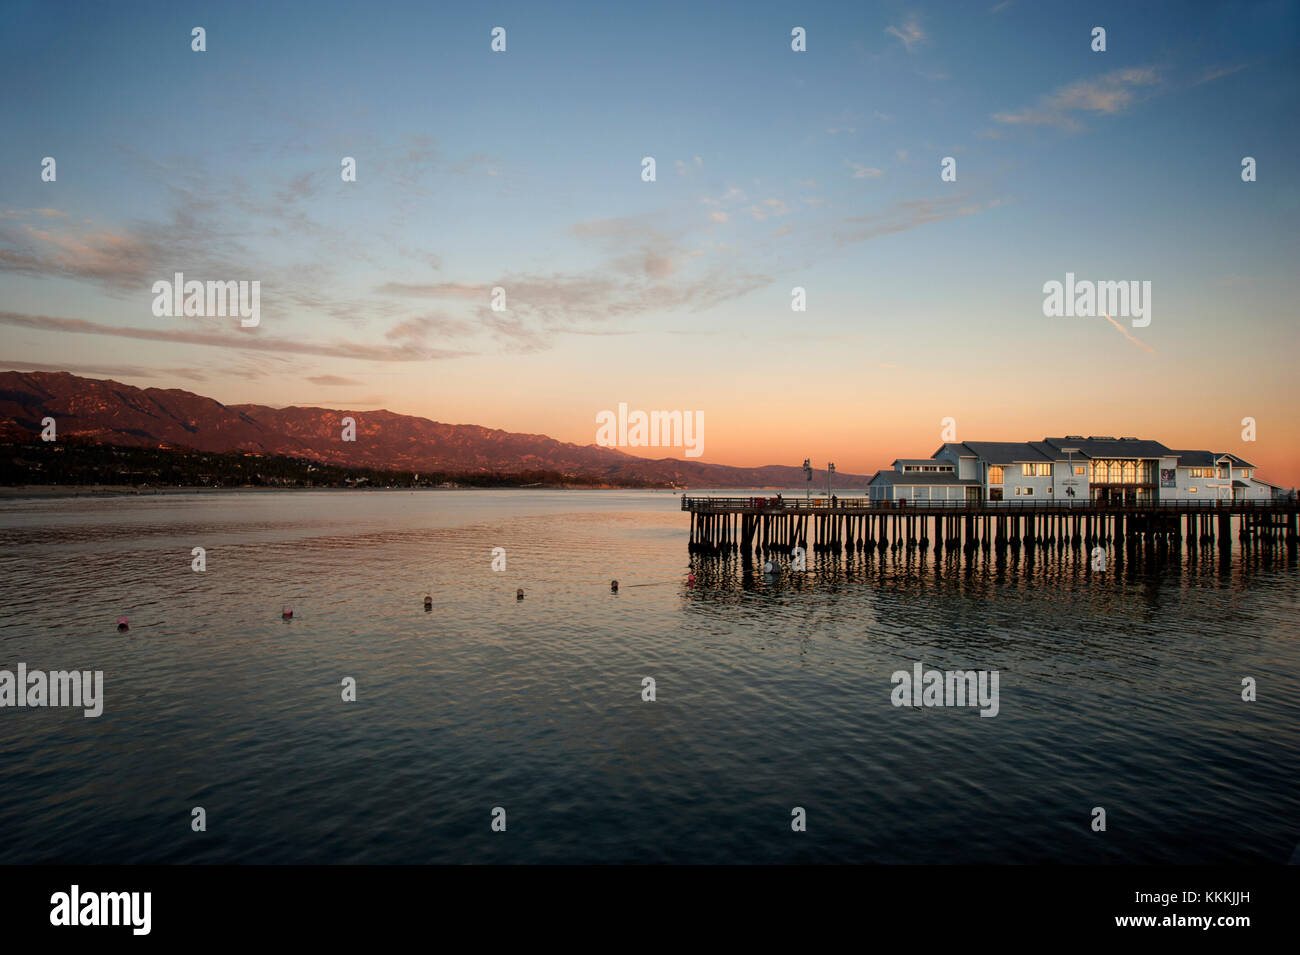 View of southern California coast with Santa Barbara pier at sunset. Stock Photo